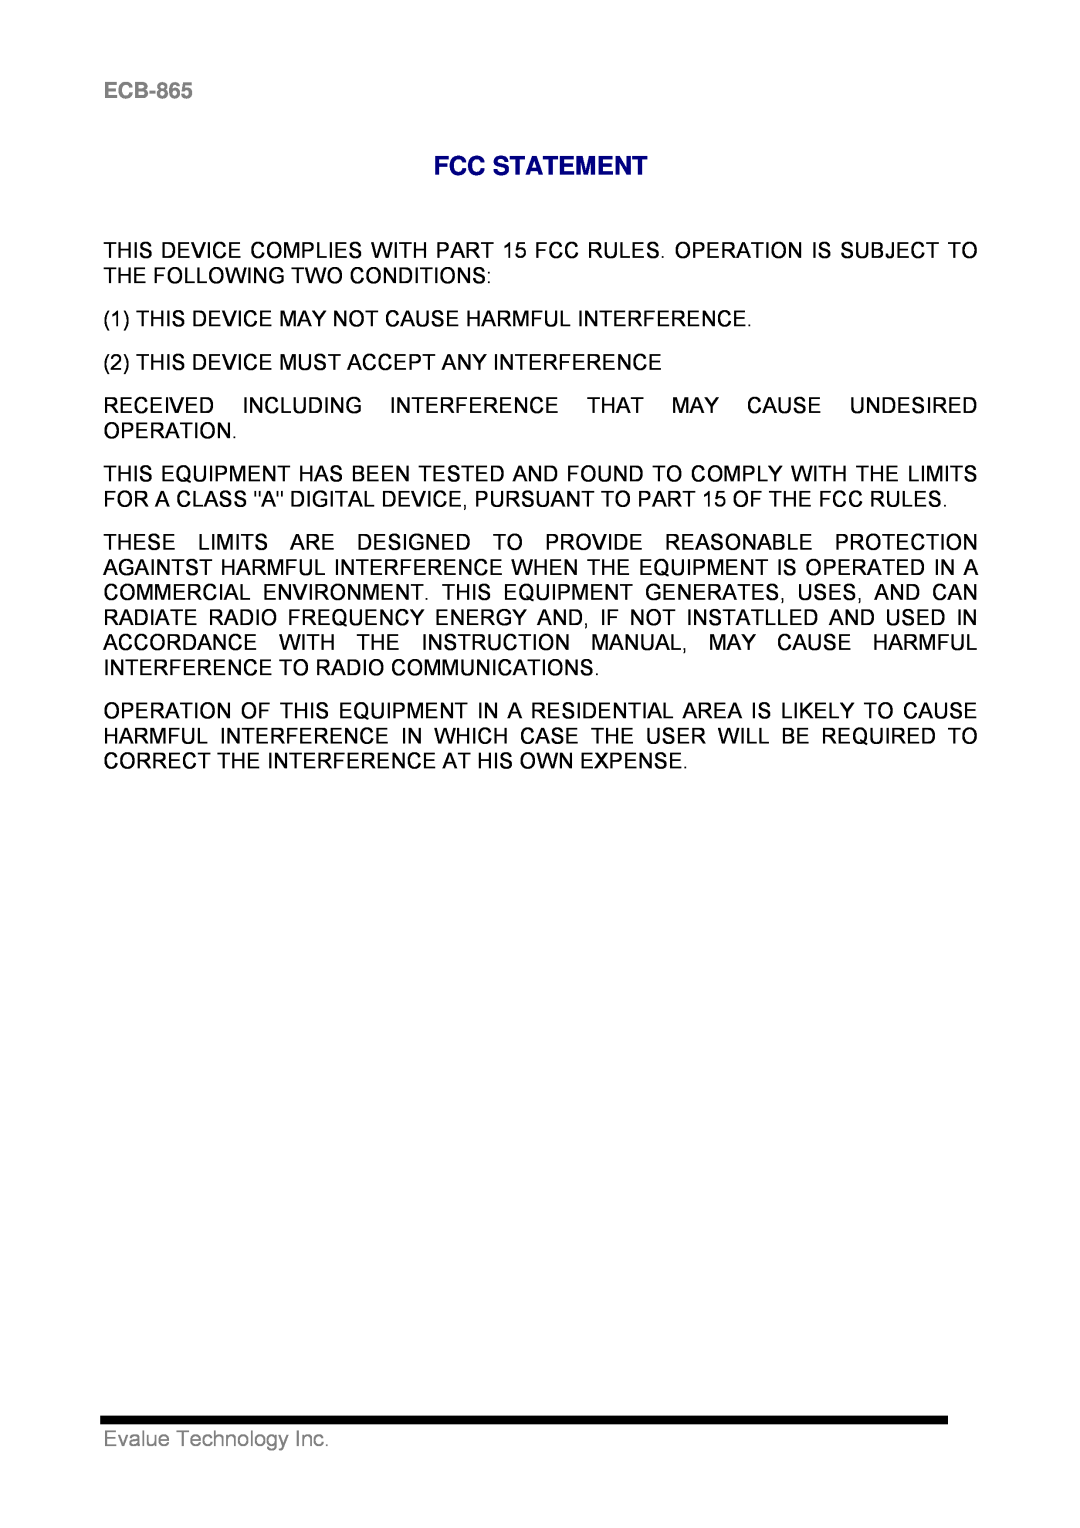 Intel ECB-865 user manual Fcc Statement, Evalue Technology Inc 